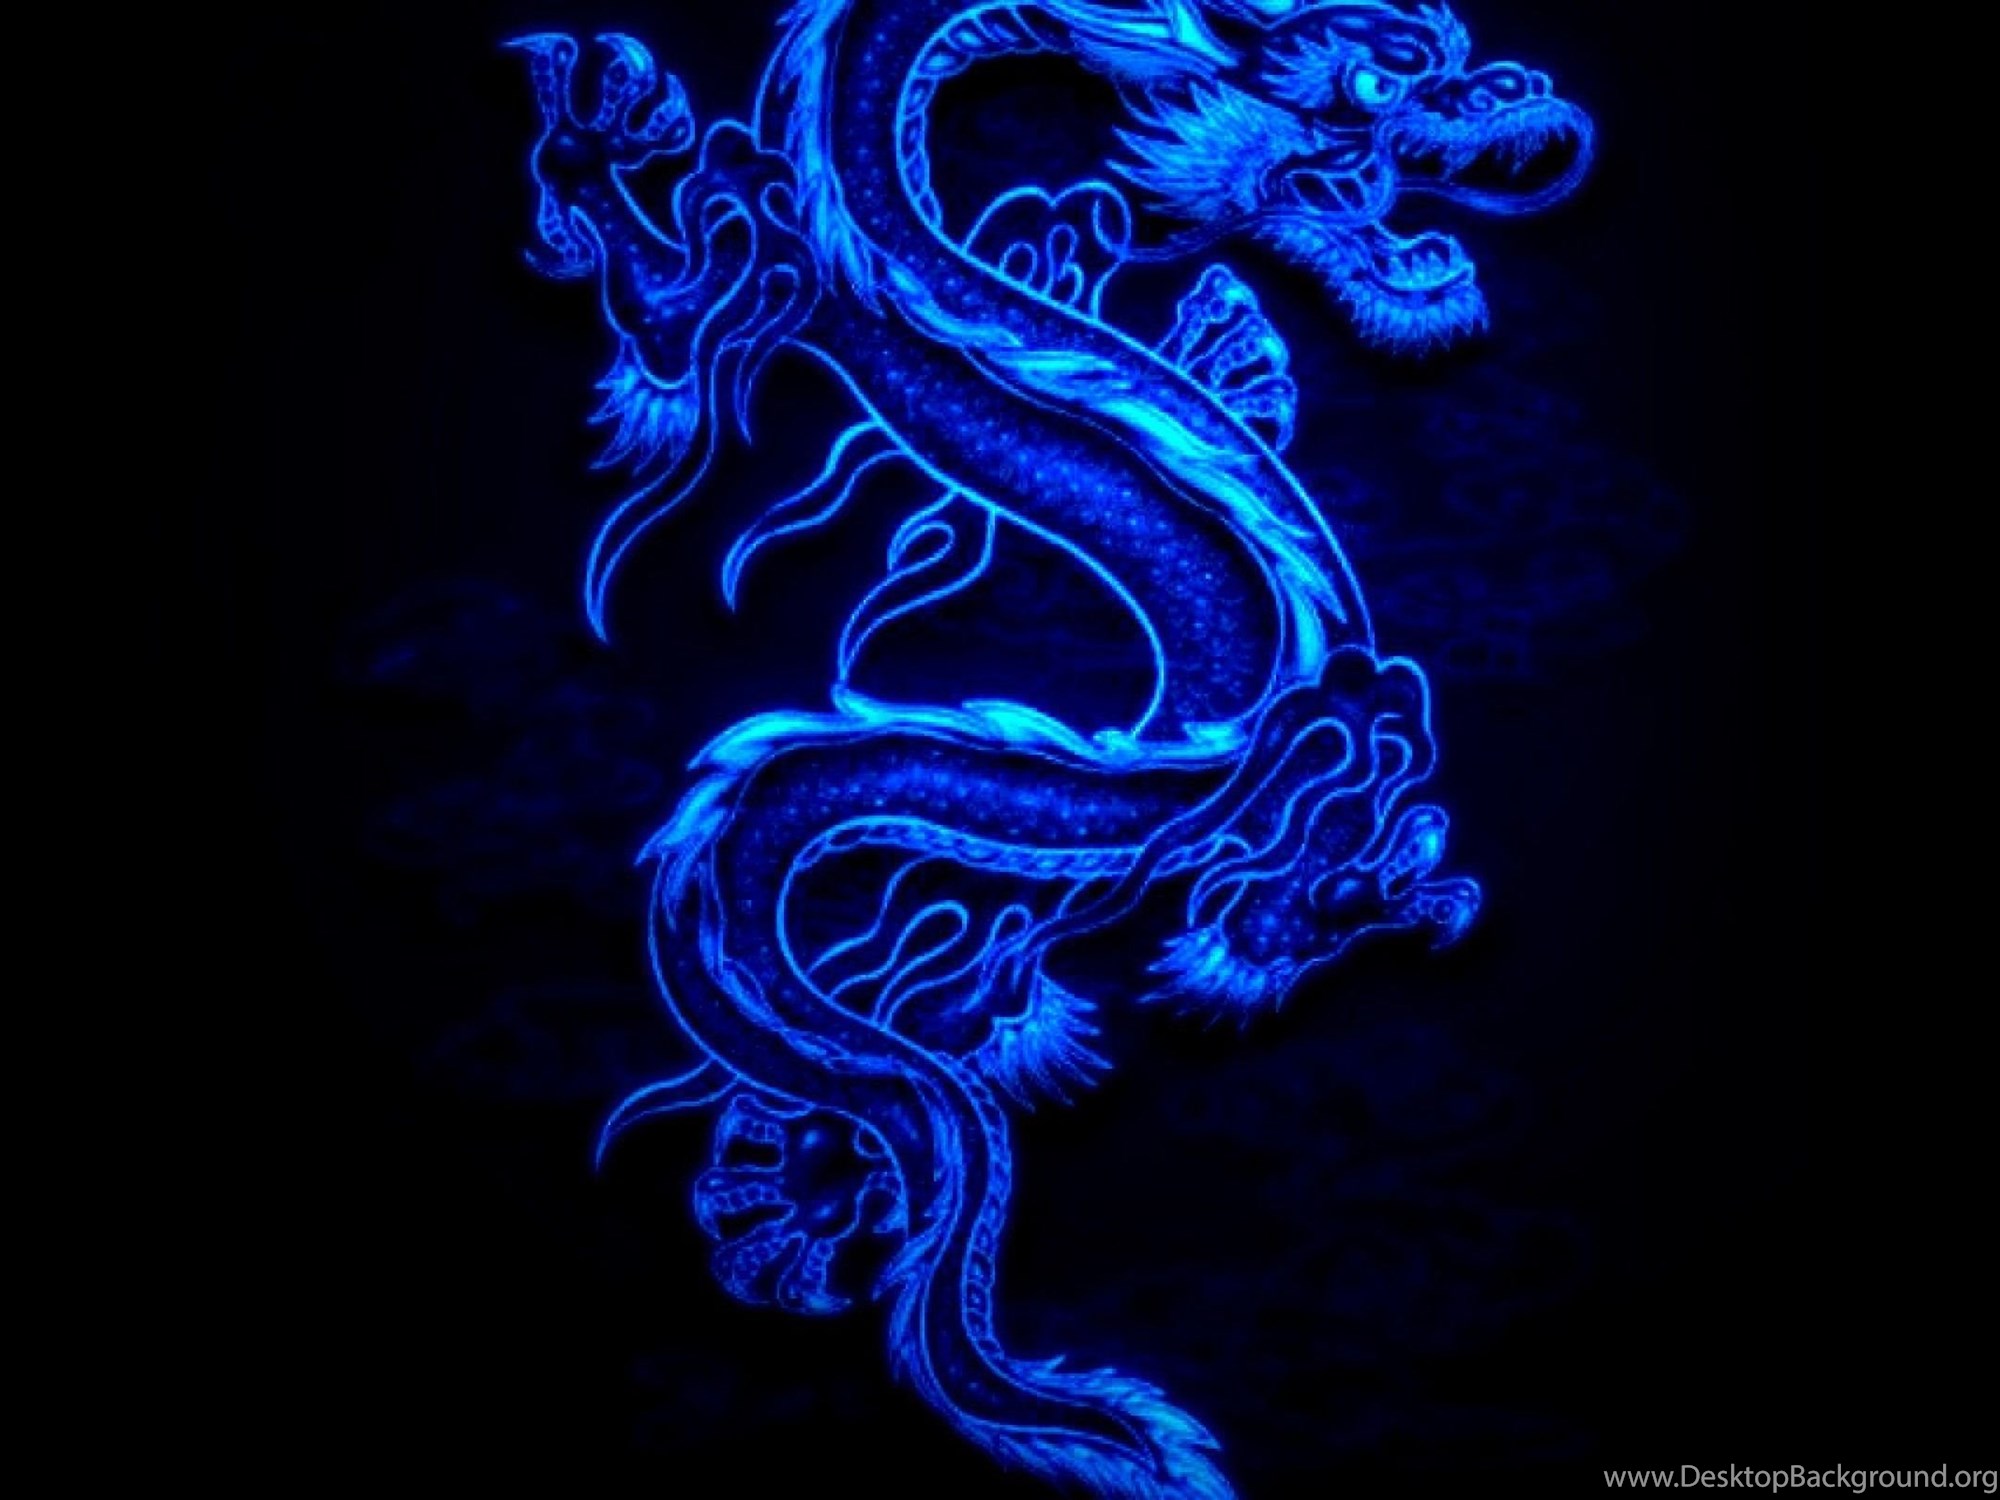 Красивые картинки на телефон дракон. Цин лун Лазурный дракон. Дракон Блэк драгон. Синий китайский дракон. Дракон на черном фоне.